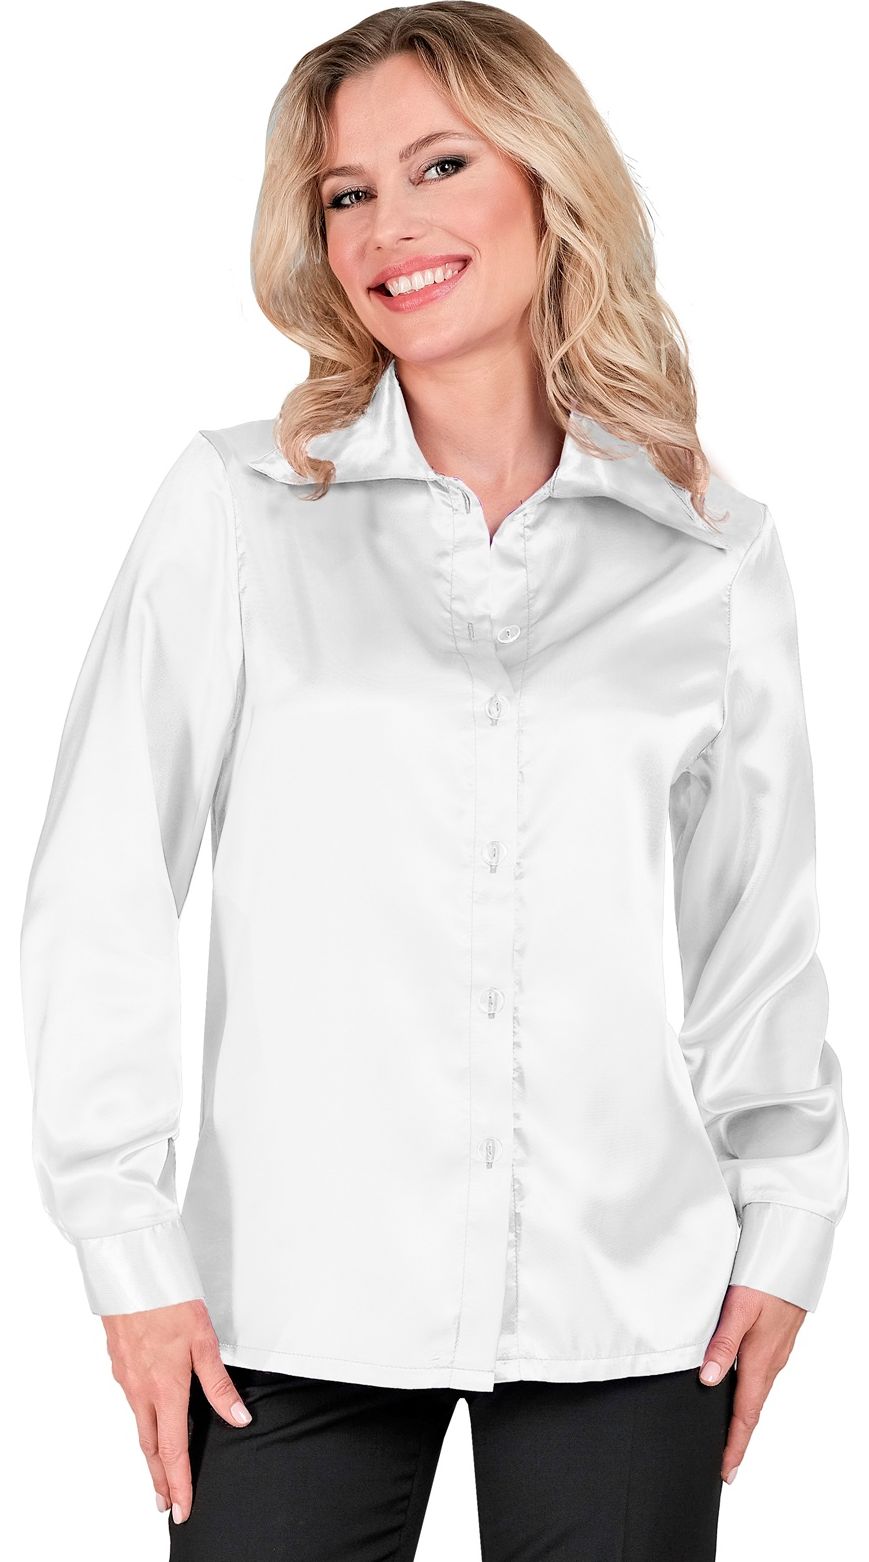 70s disco blouse satijn wit vrouwen